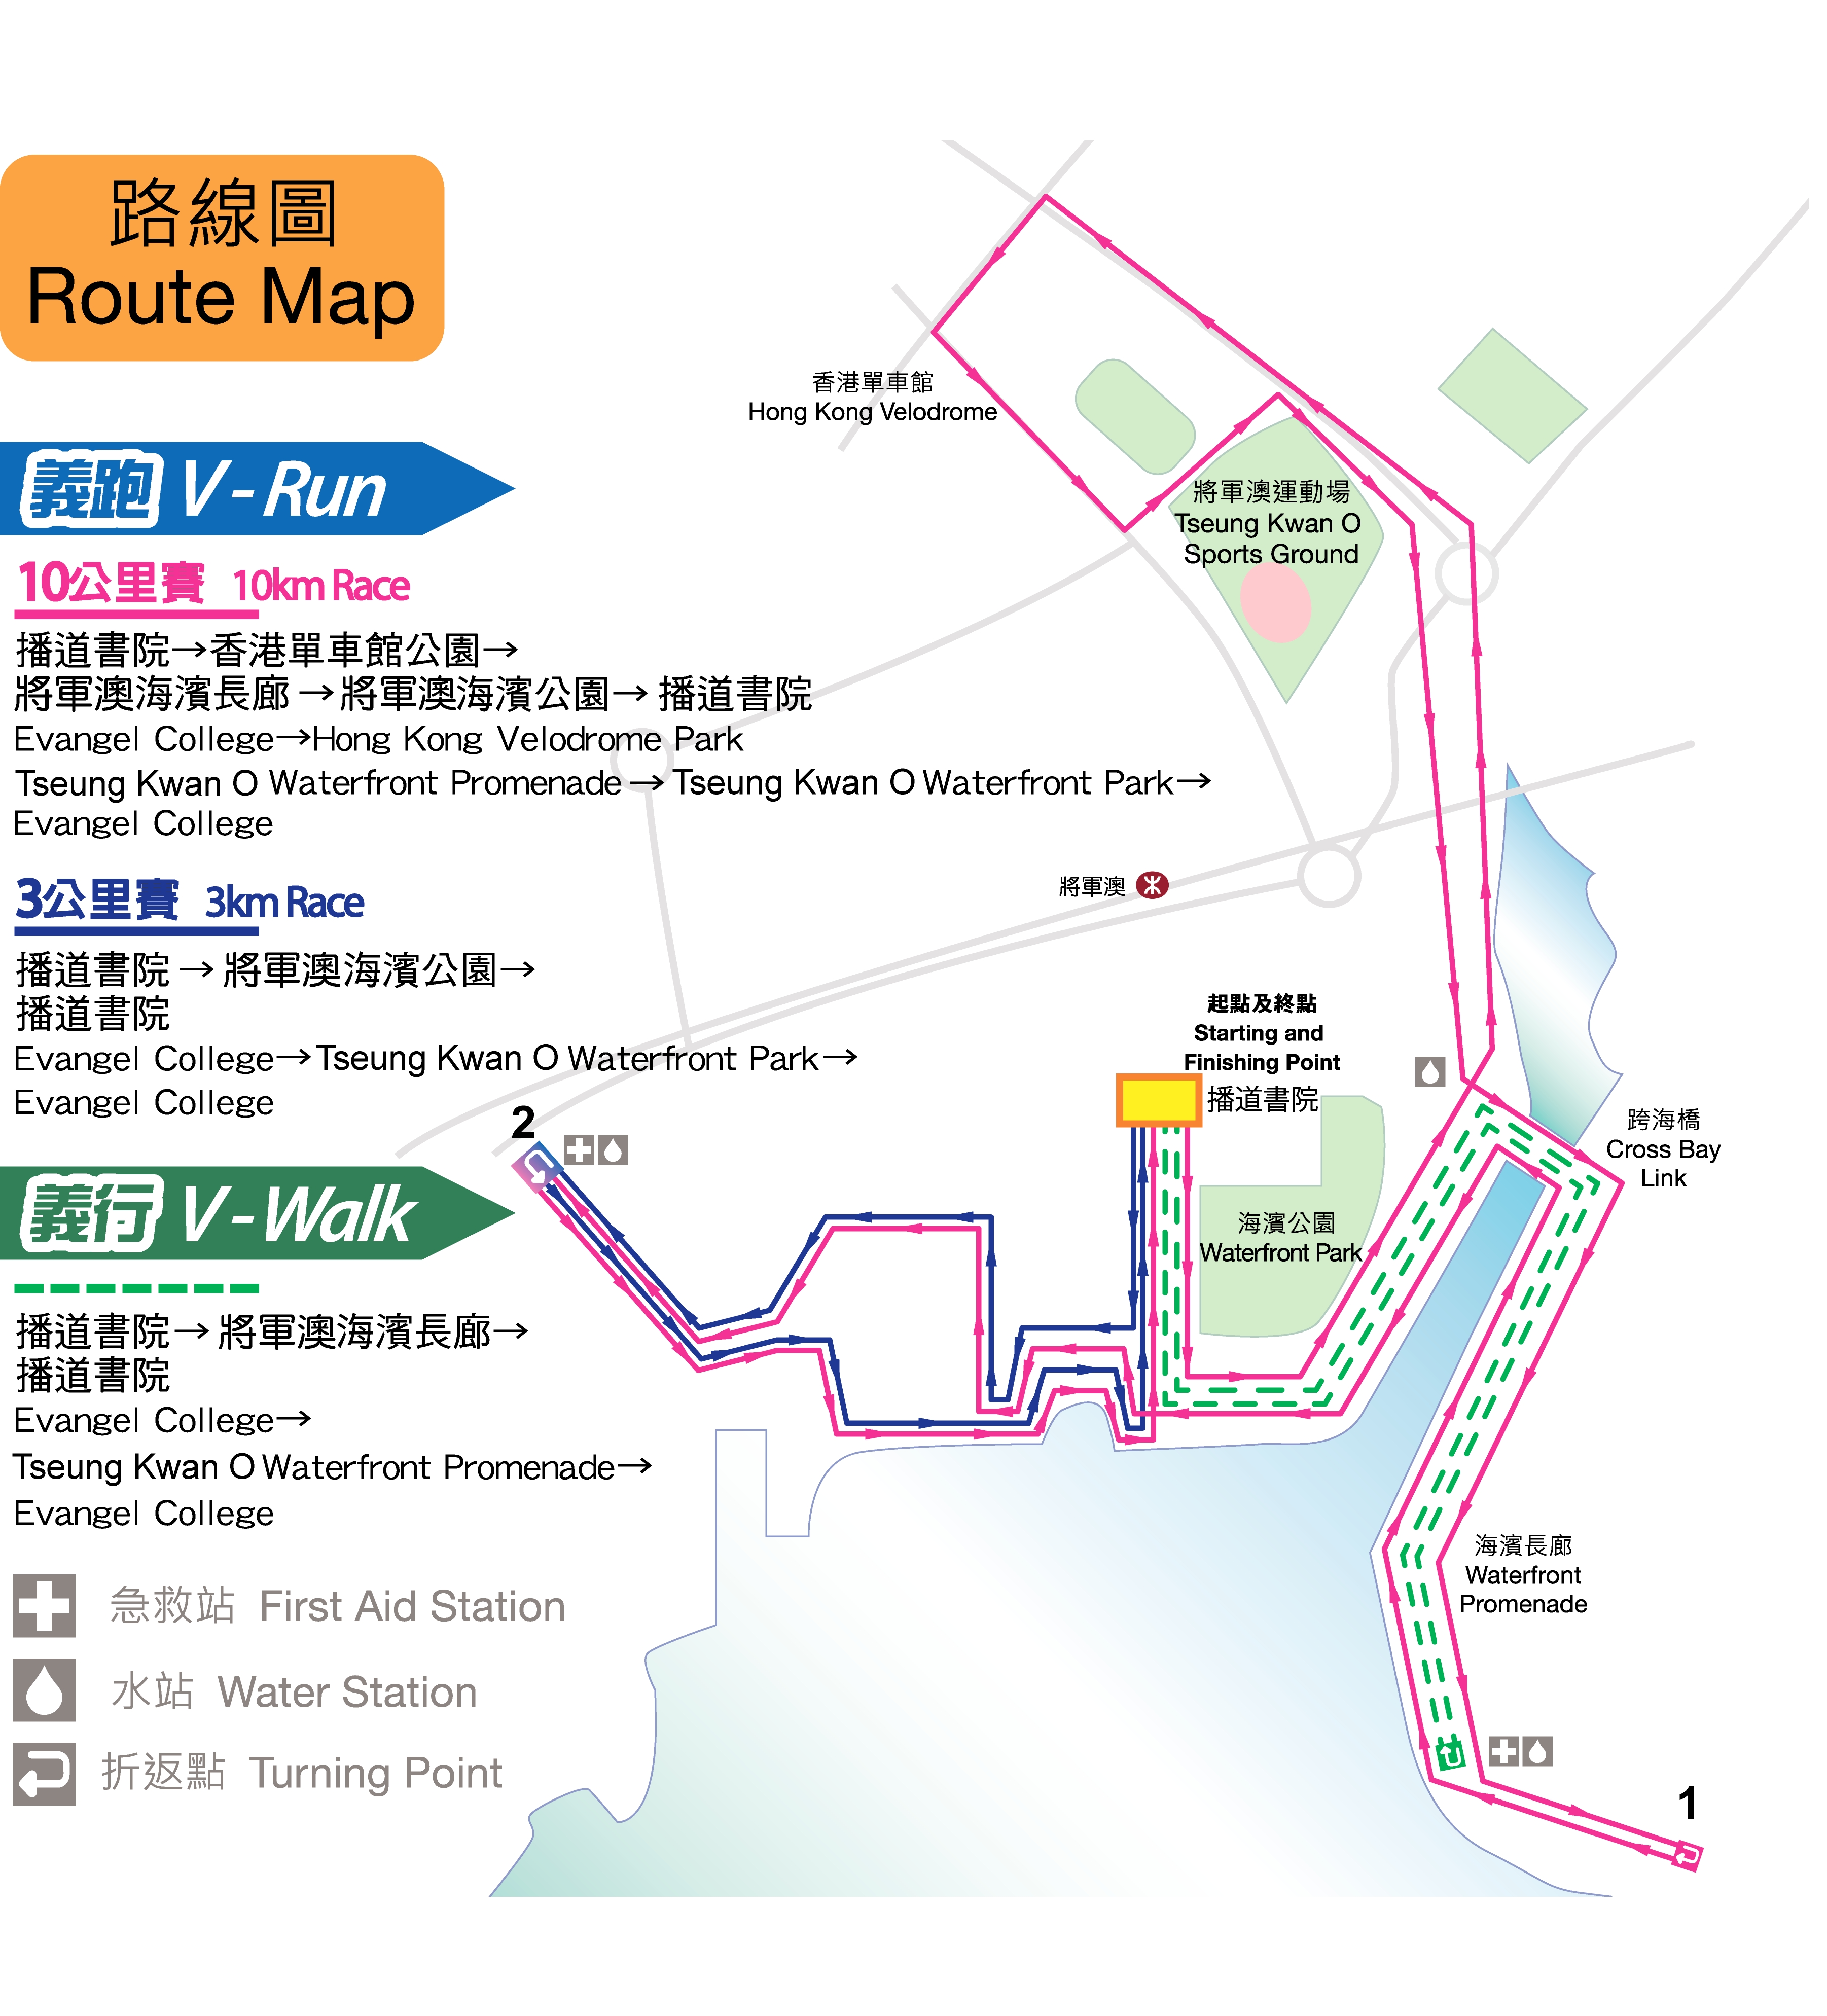 路線圖 Route Map